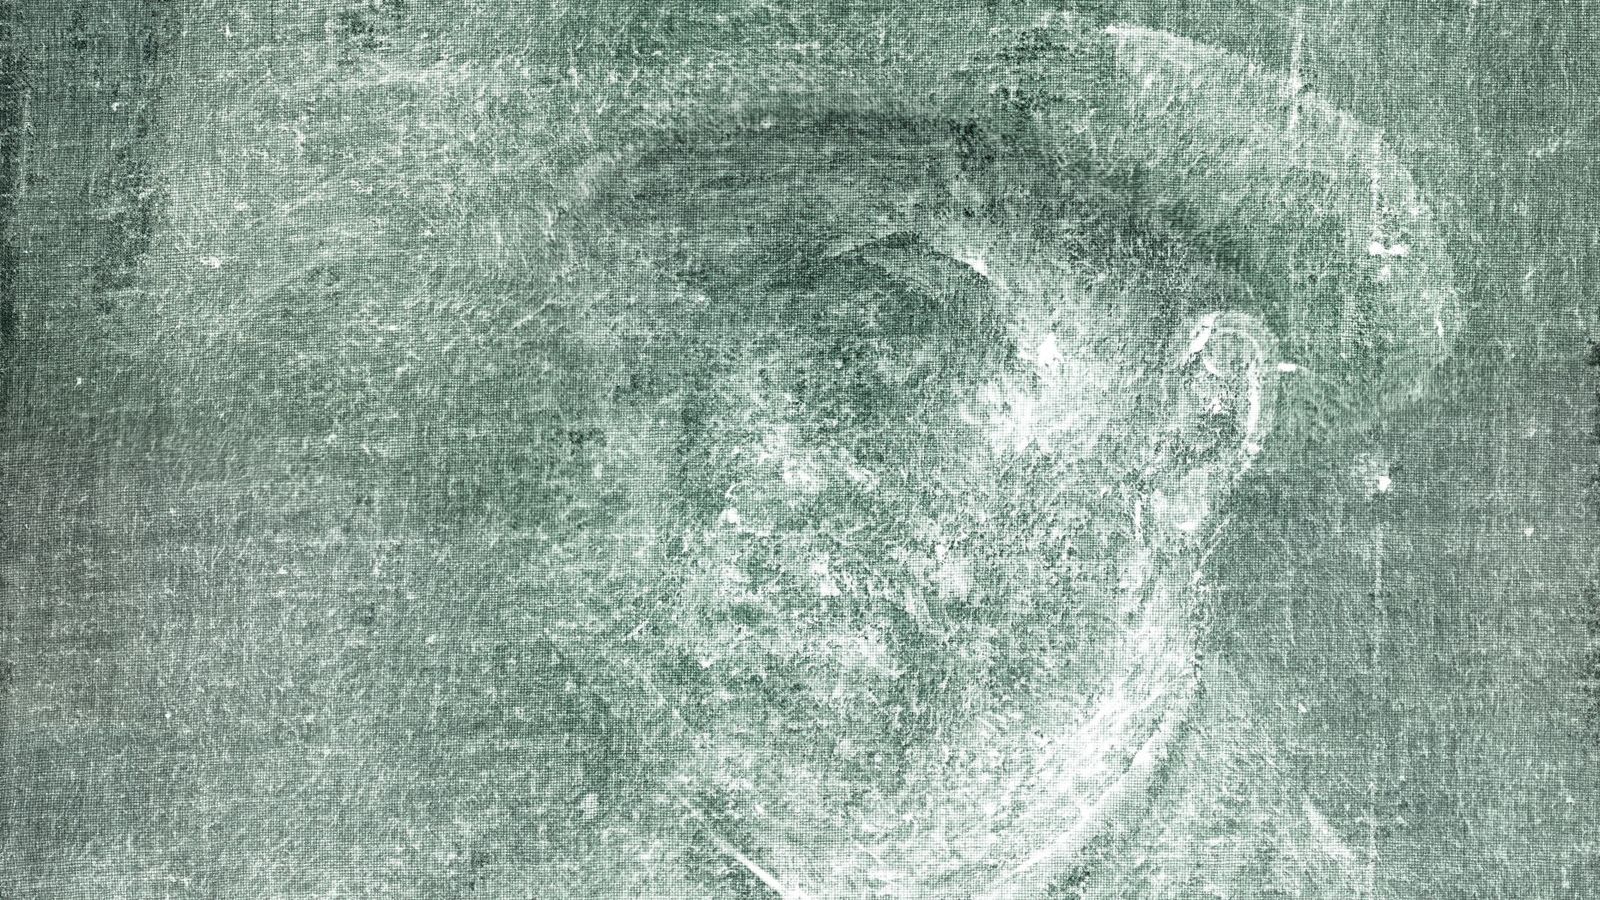 Vincent van Gogh self-portrait: X-ray uncovers secret artwork hidden for more than a century | UK News